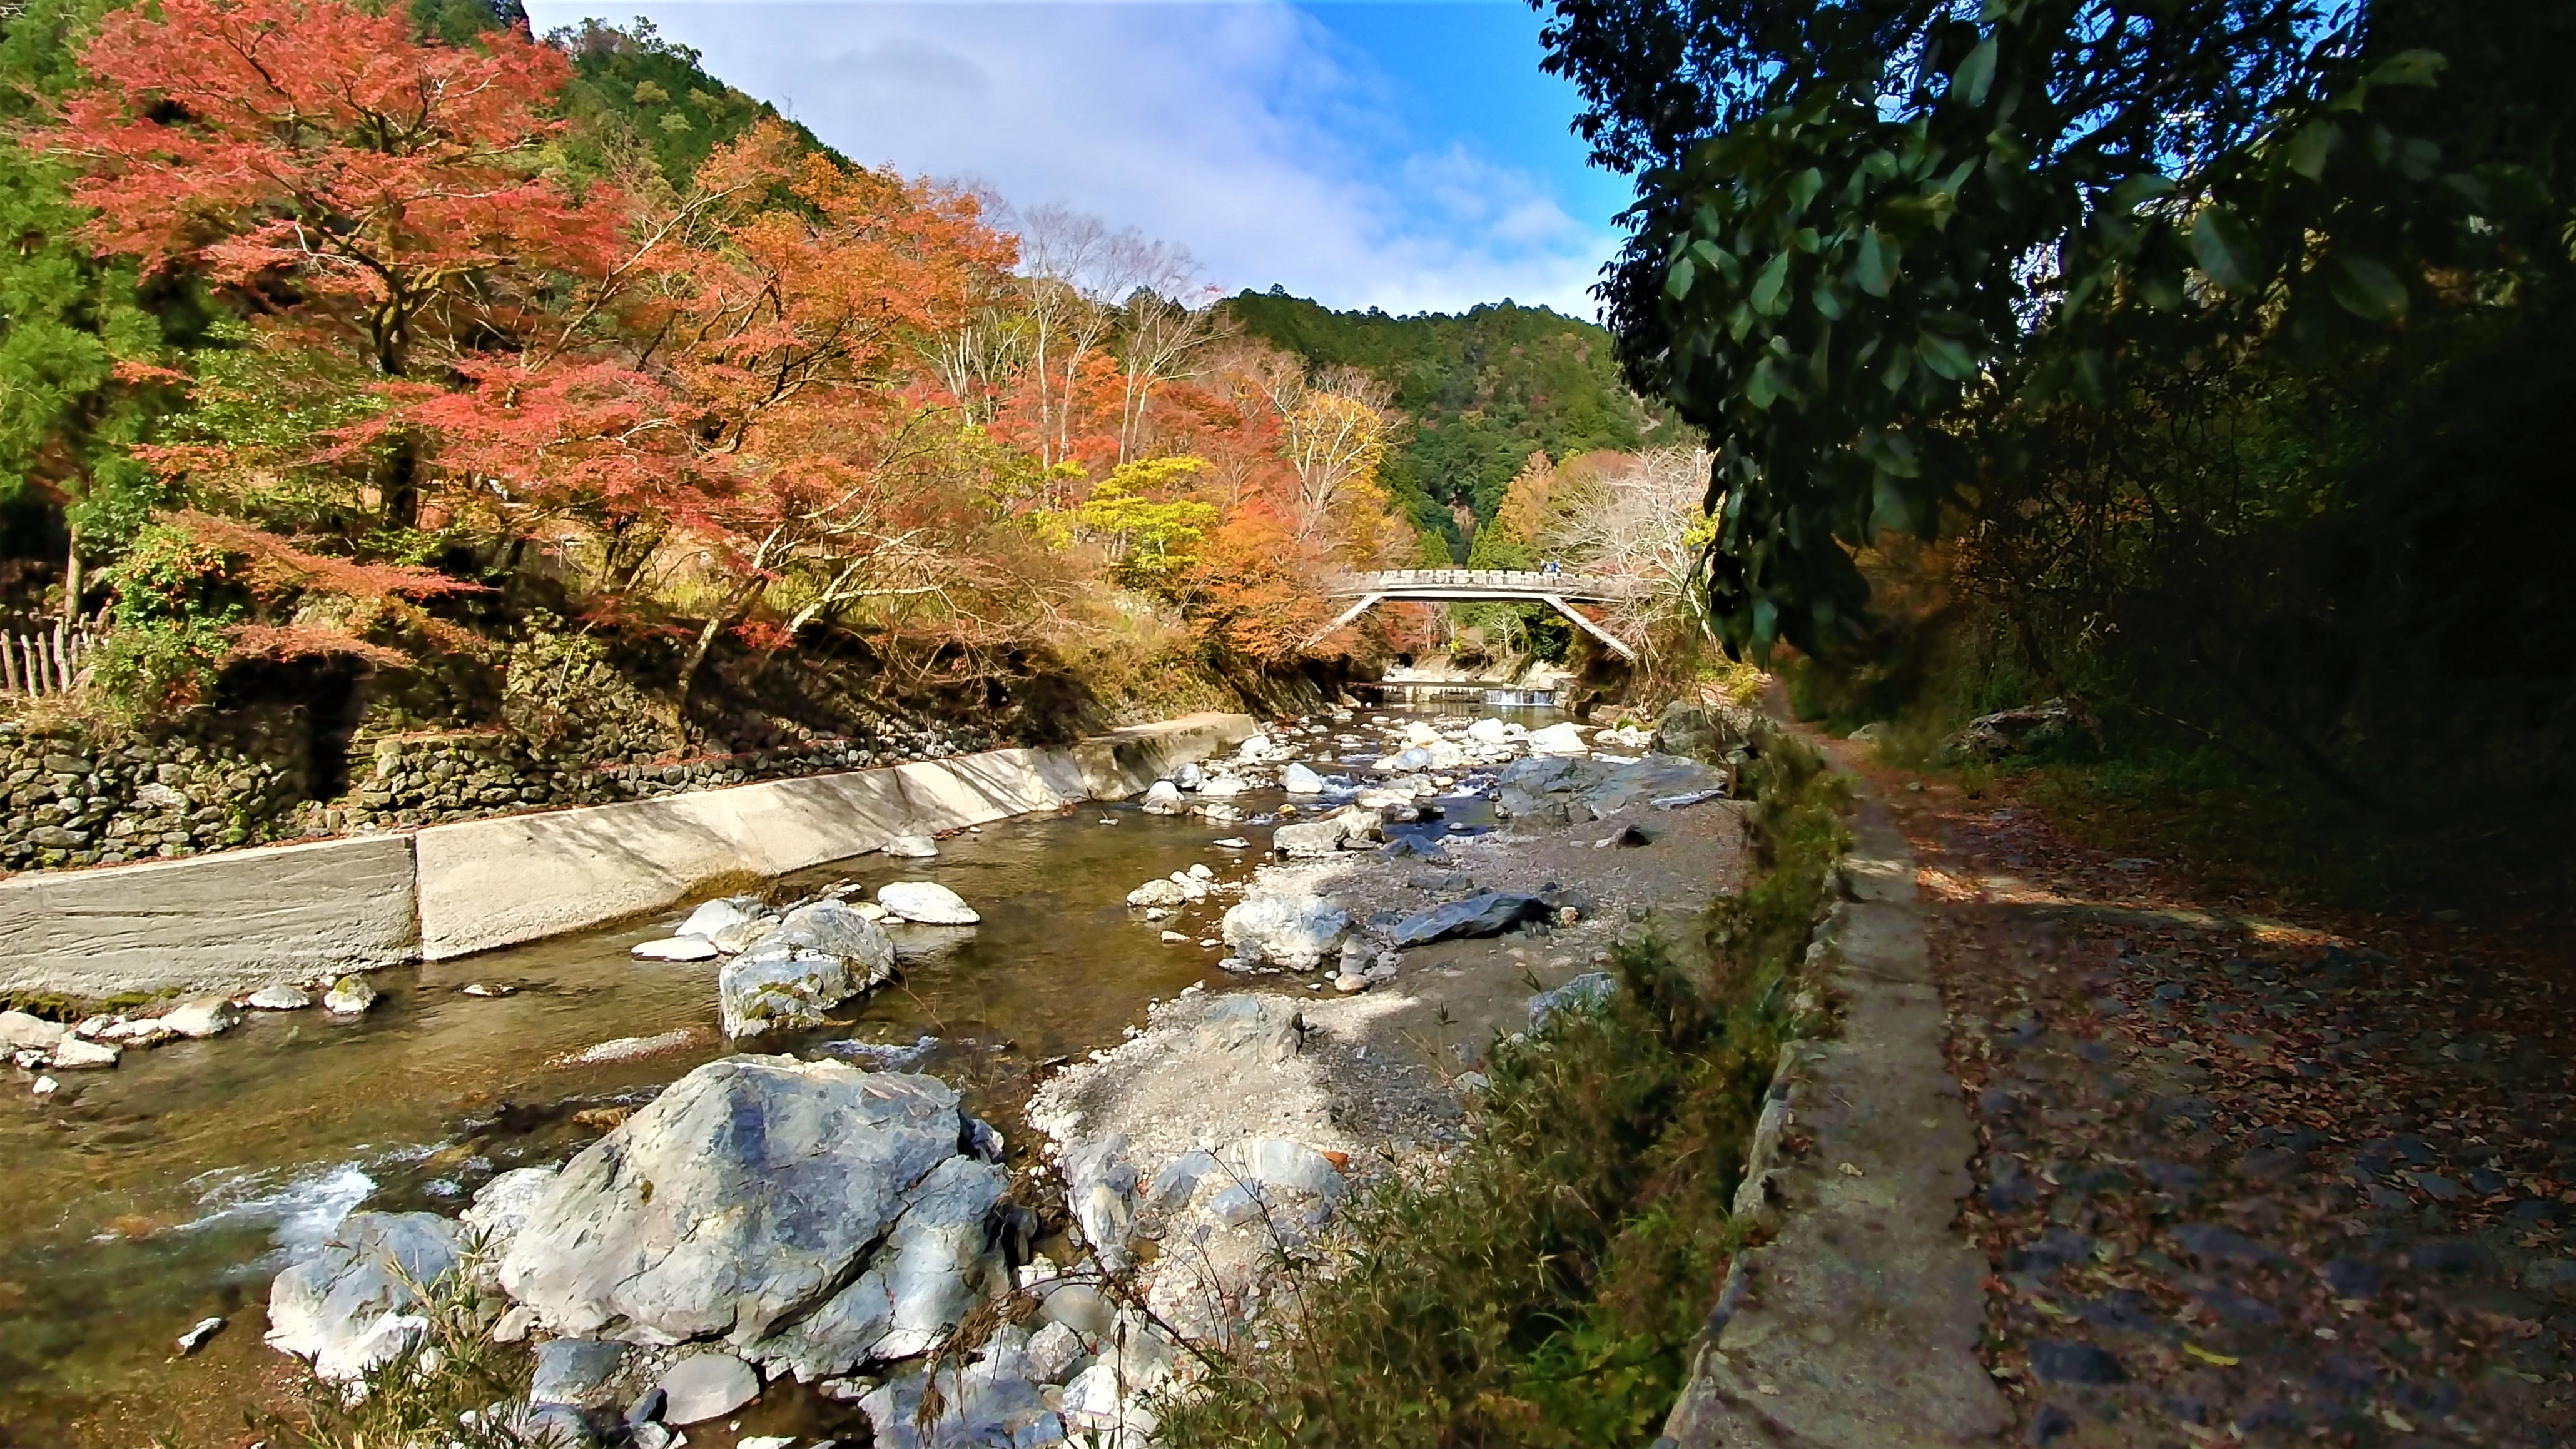 takao togano automne momiji kyoto randonnee blog voyage japon arpenter le chemin